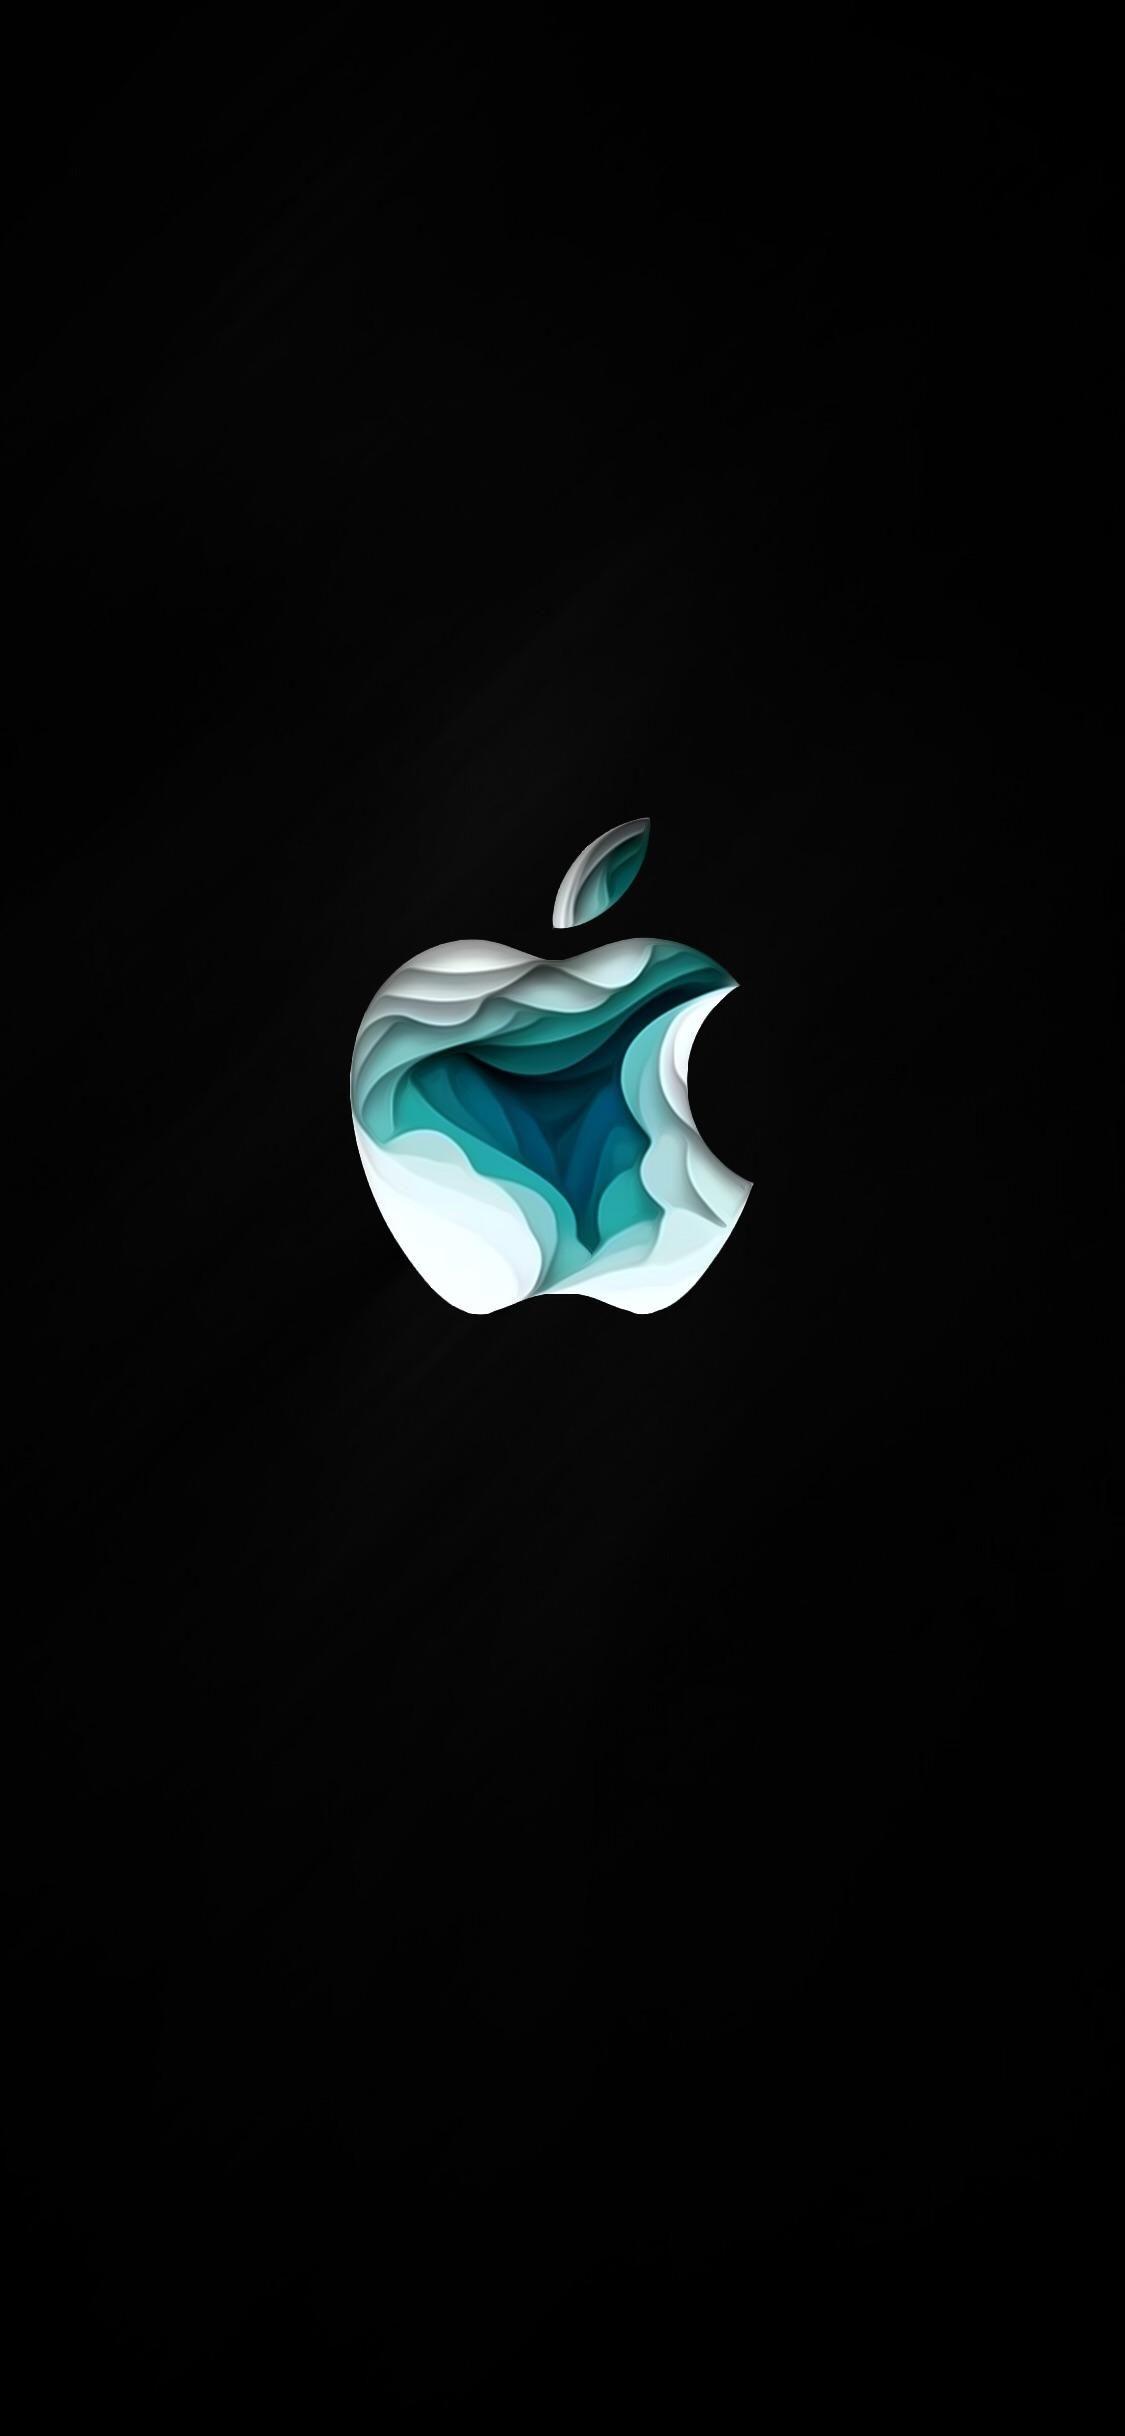 Apple Special Event Logo. True Black.